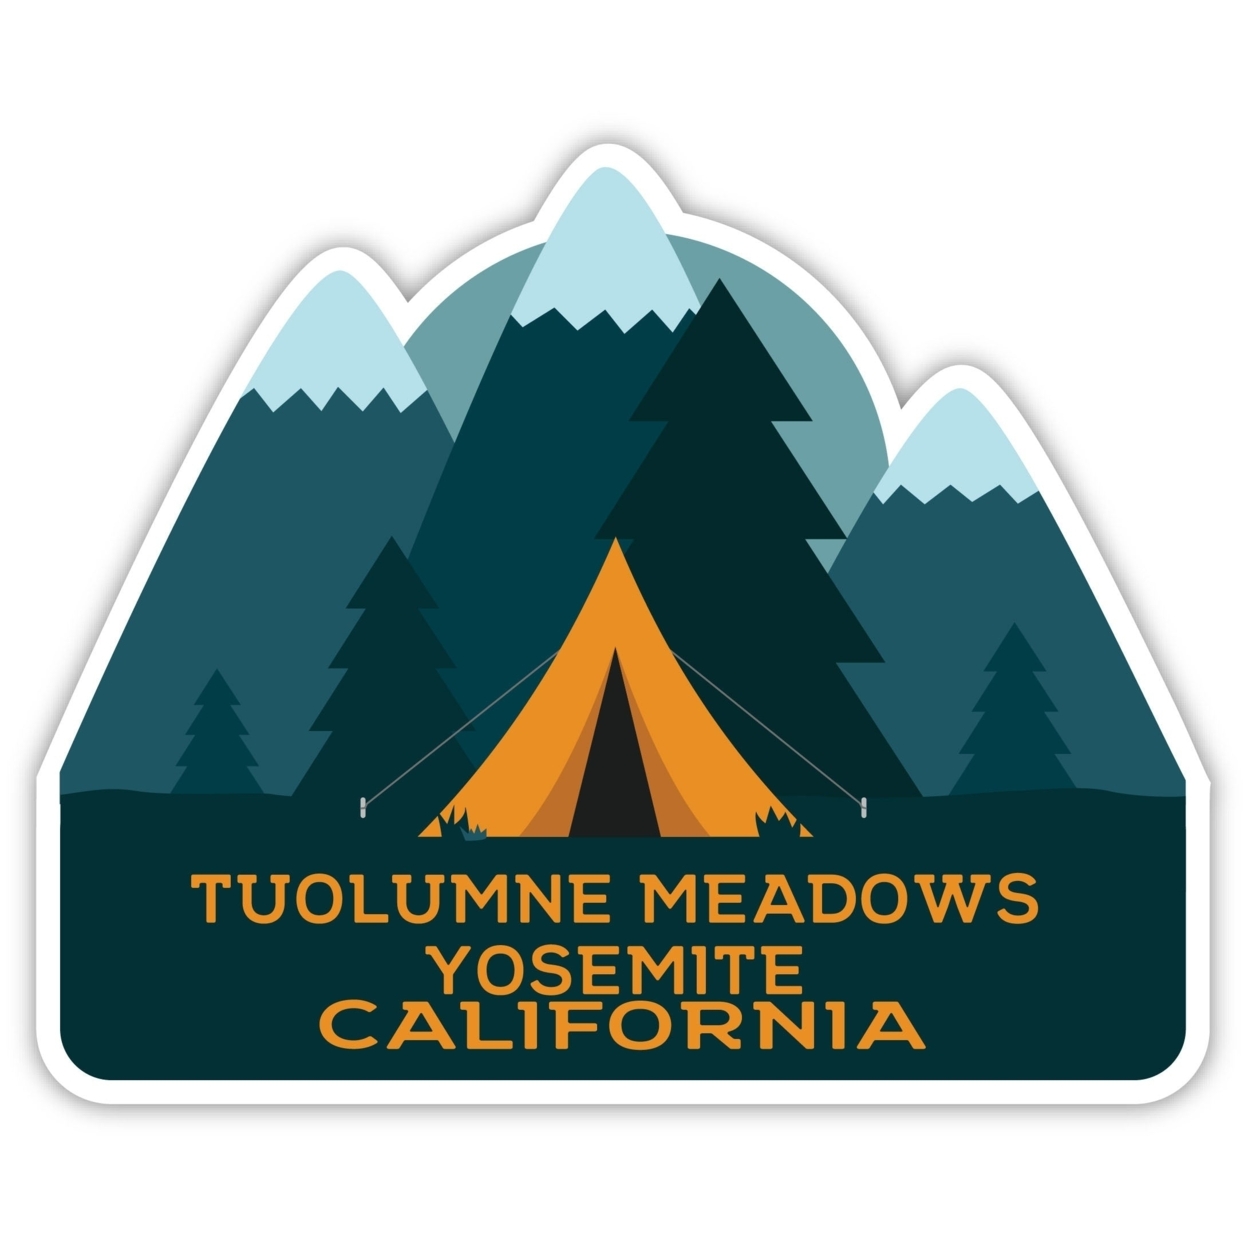 Tuolumne Meadows Yosemite California Souvenir Decorative Stickers (Choose Theme And Size) - Single Unit, 4-Inch, Adventures Awaits